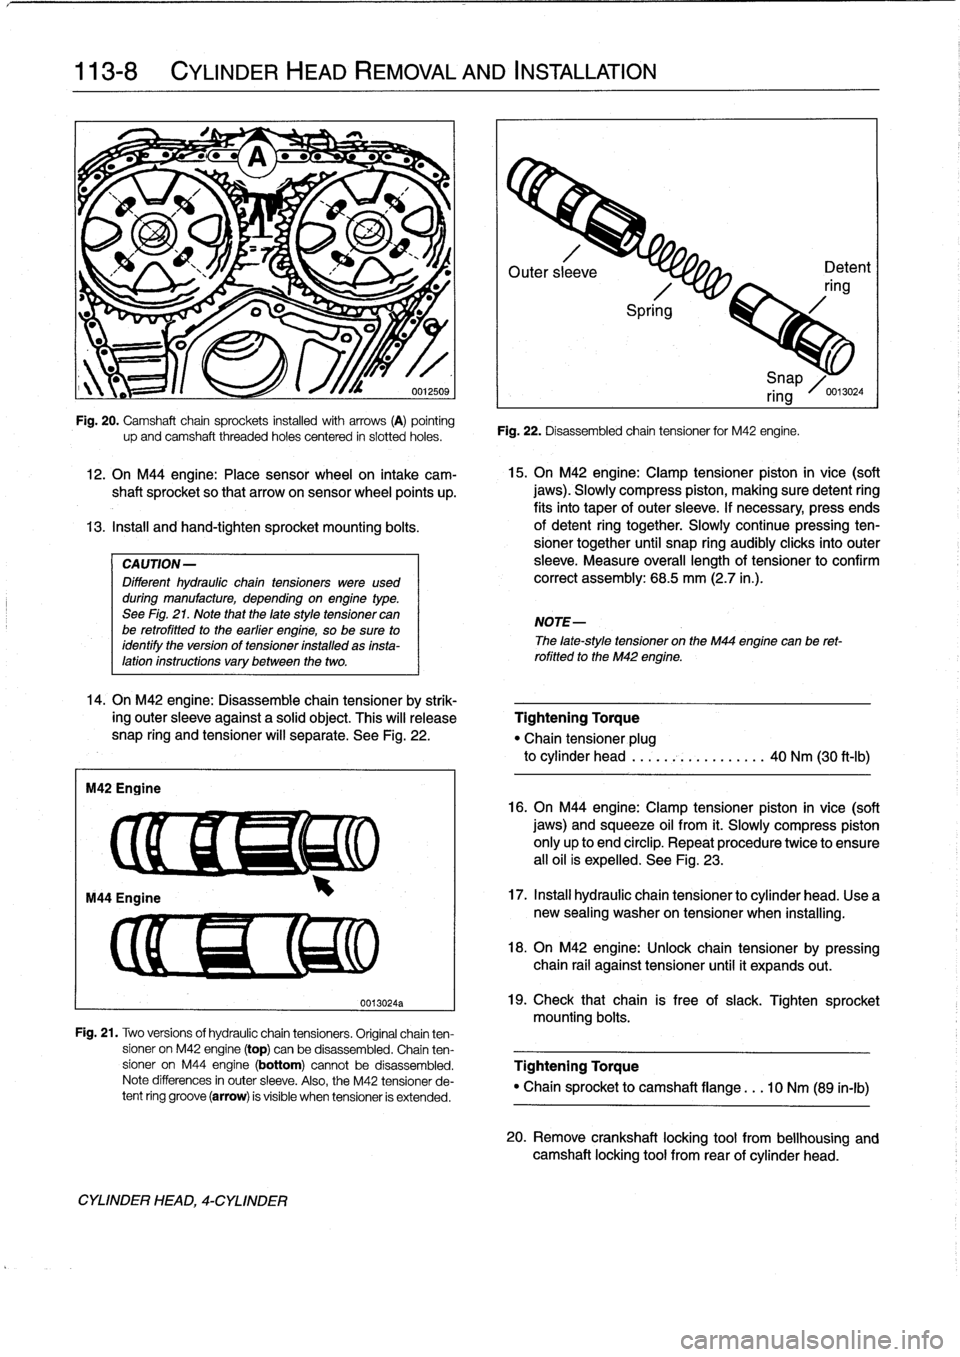 BMW 318i 1997 E36 Workshop Manual 
113-8

	

CYLINDER
HEAD
REMOVAL
AND
INSTALLATION

IW?
-
L
/~f
W

	

~
4r

"

-
"

	

;,s
1

12
.
On
M44
engine
:
Place
sensor
wheel
on
intake
cam-
shaft
sprocket
so
that
arrowon
sensor
wheel
points
